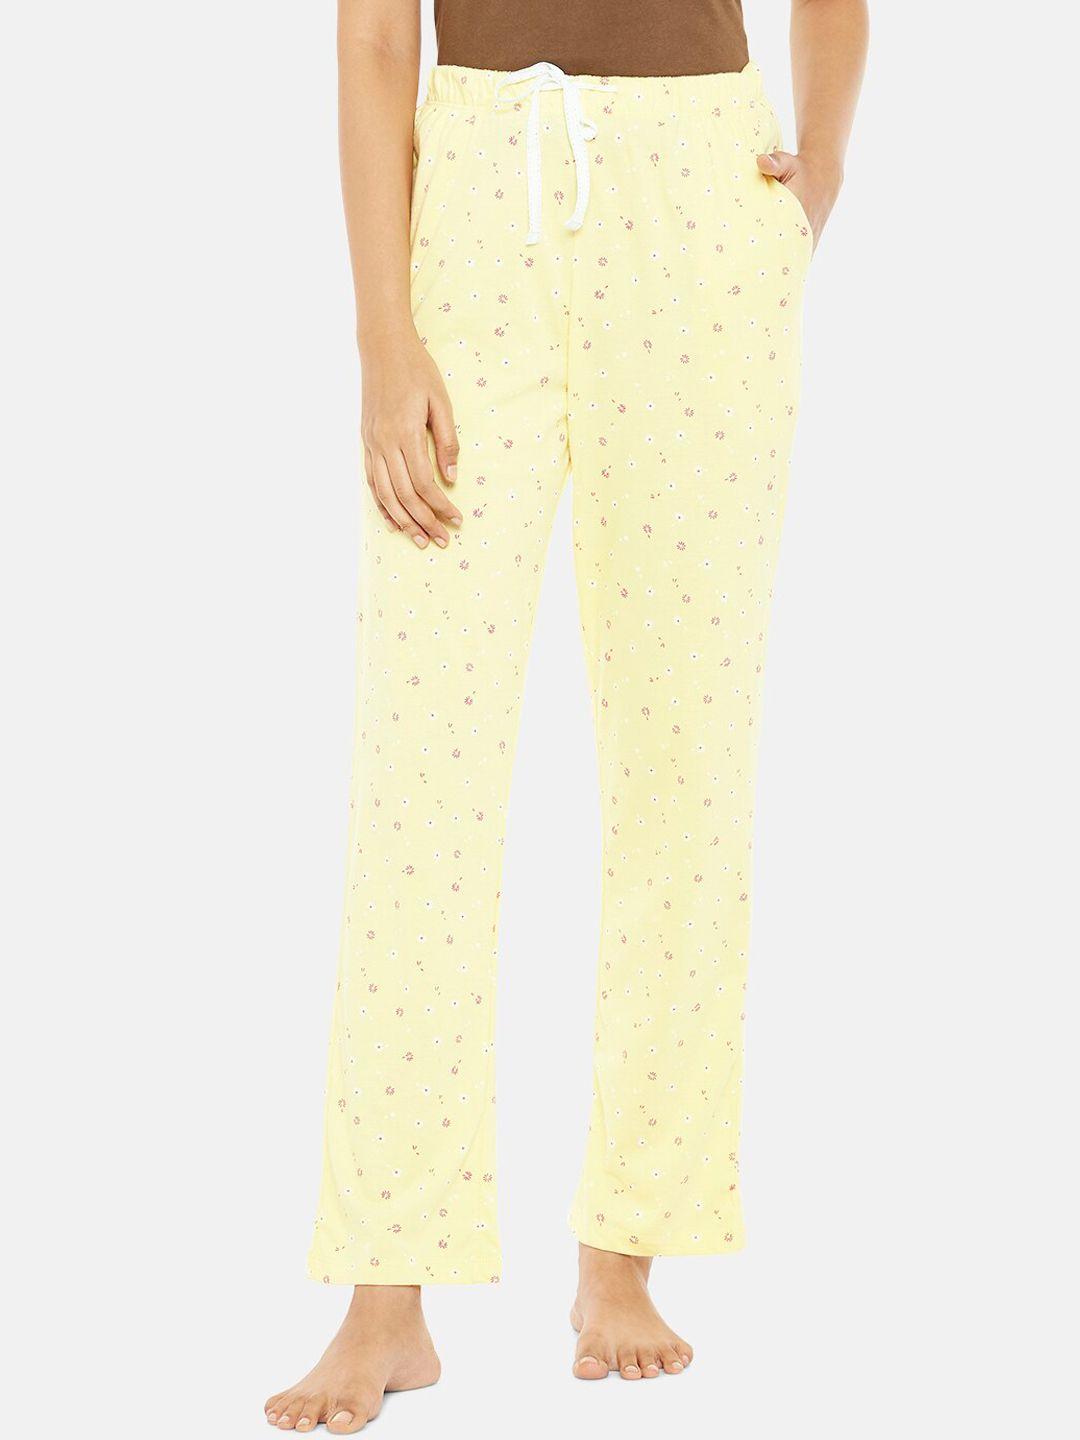 dreamz by pantaloons women yellow printed pyjamas